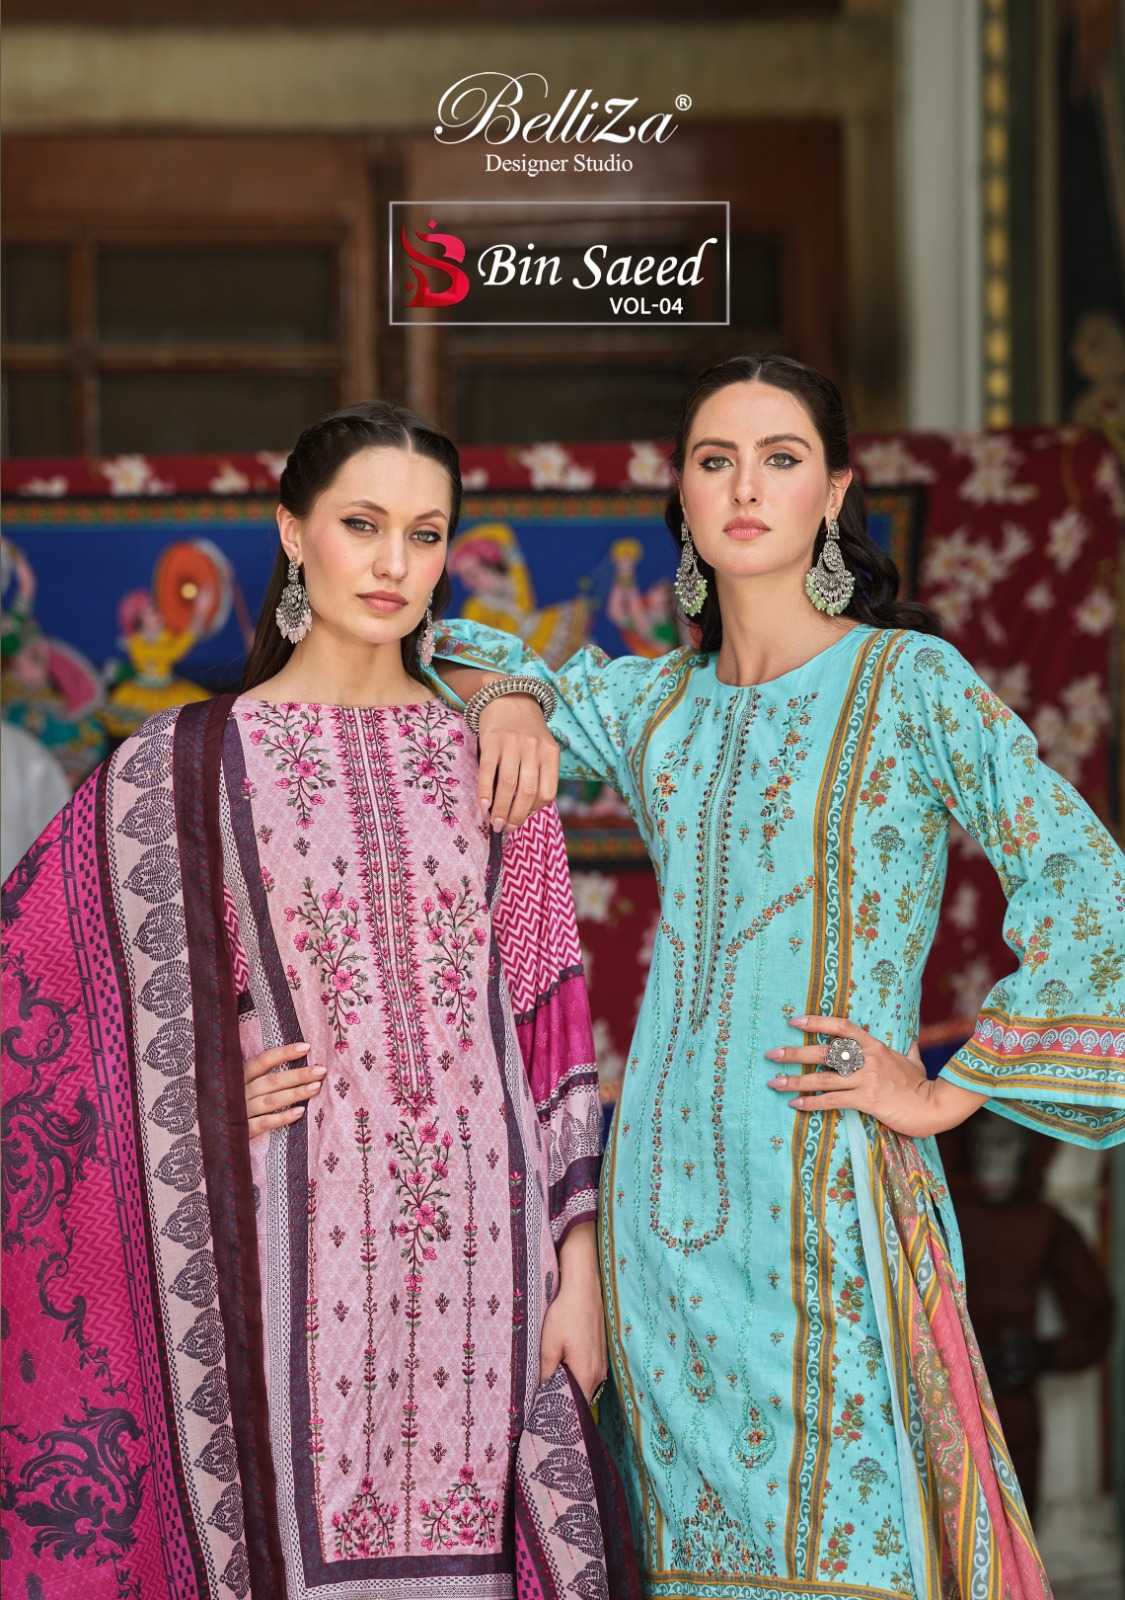 belliza designer bin saeed vol 4 simple pakistani style salwar kameez exports